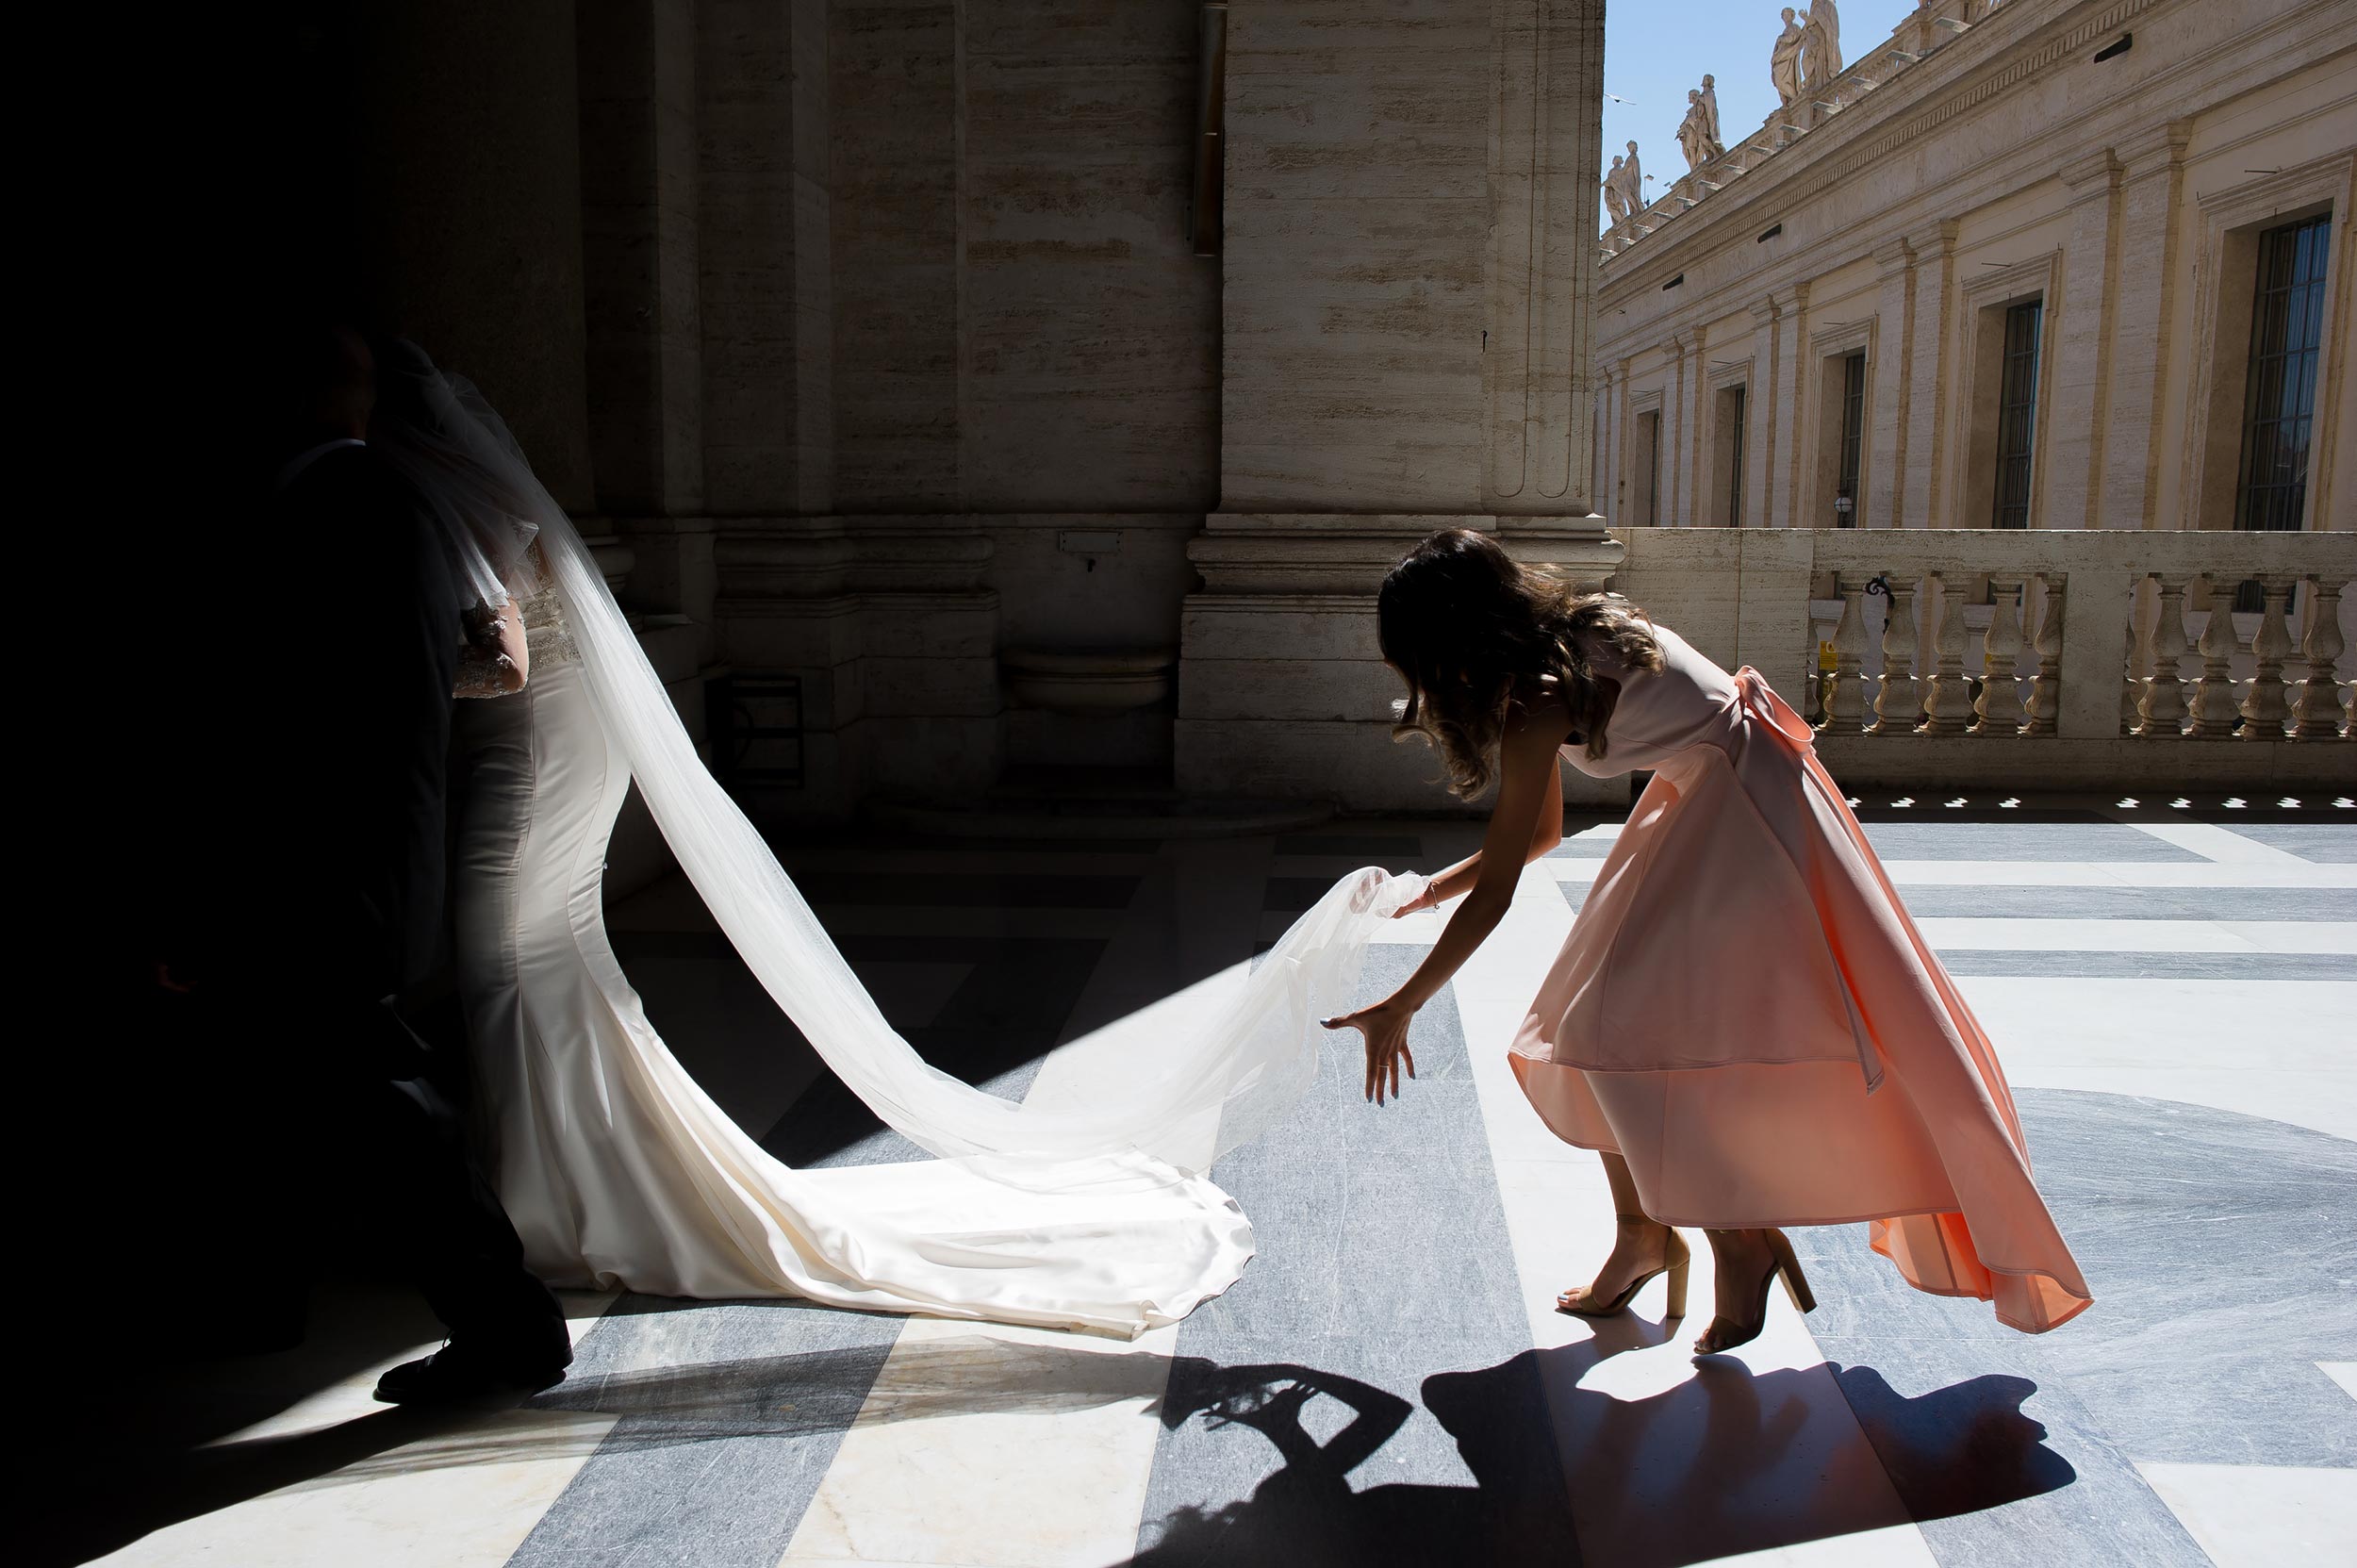 st-peter-basilica-wedding-in-vatican-silhouette-bridesmaid-helps-bride-holding-the-veil.jpg